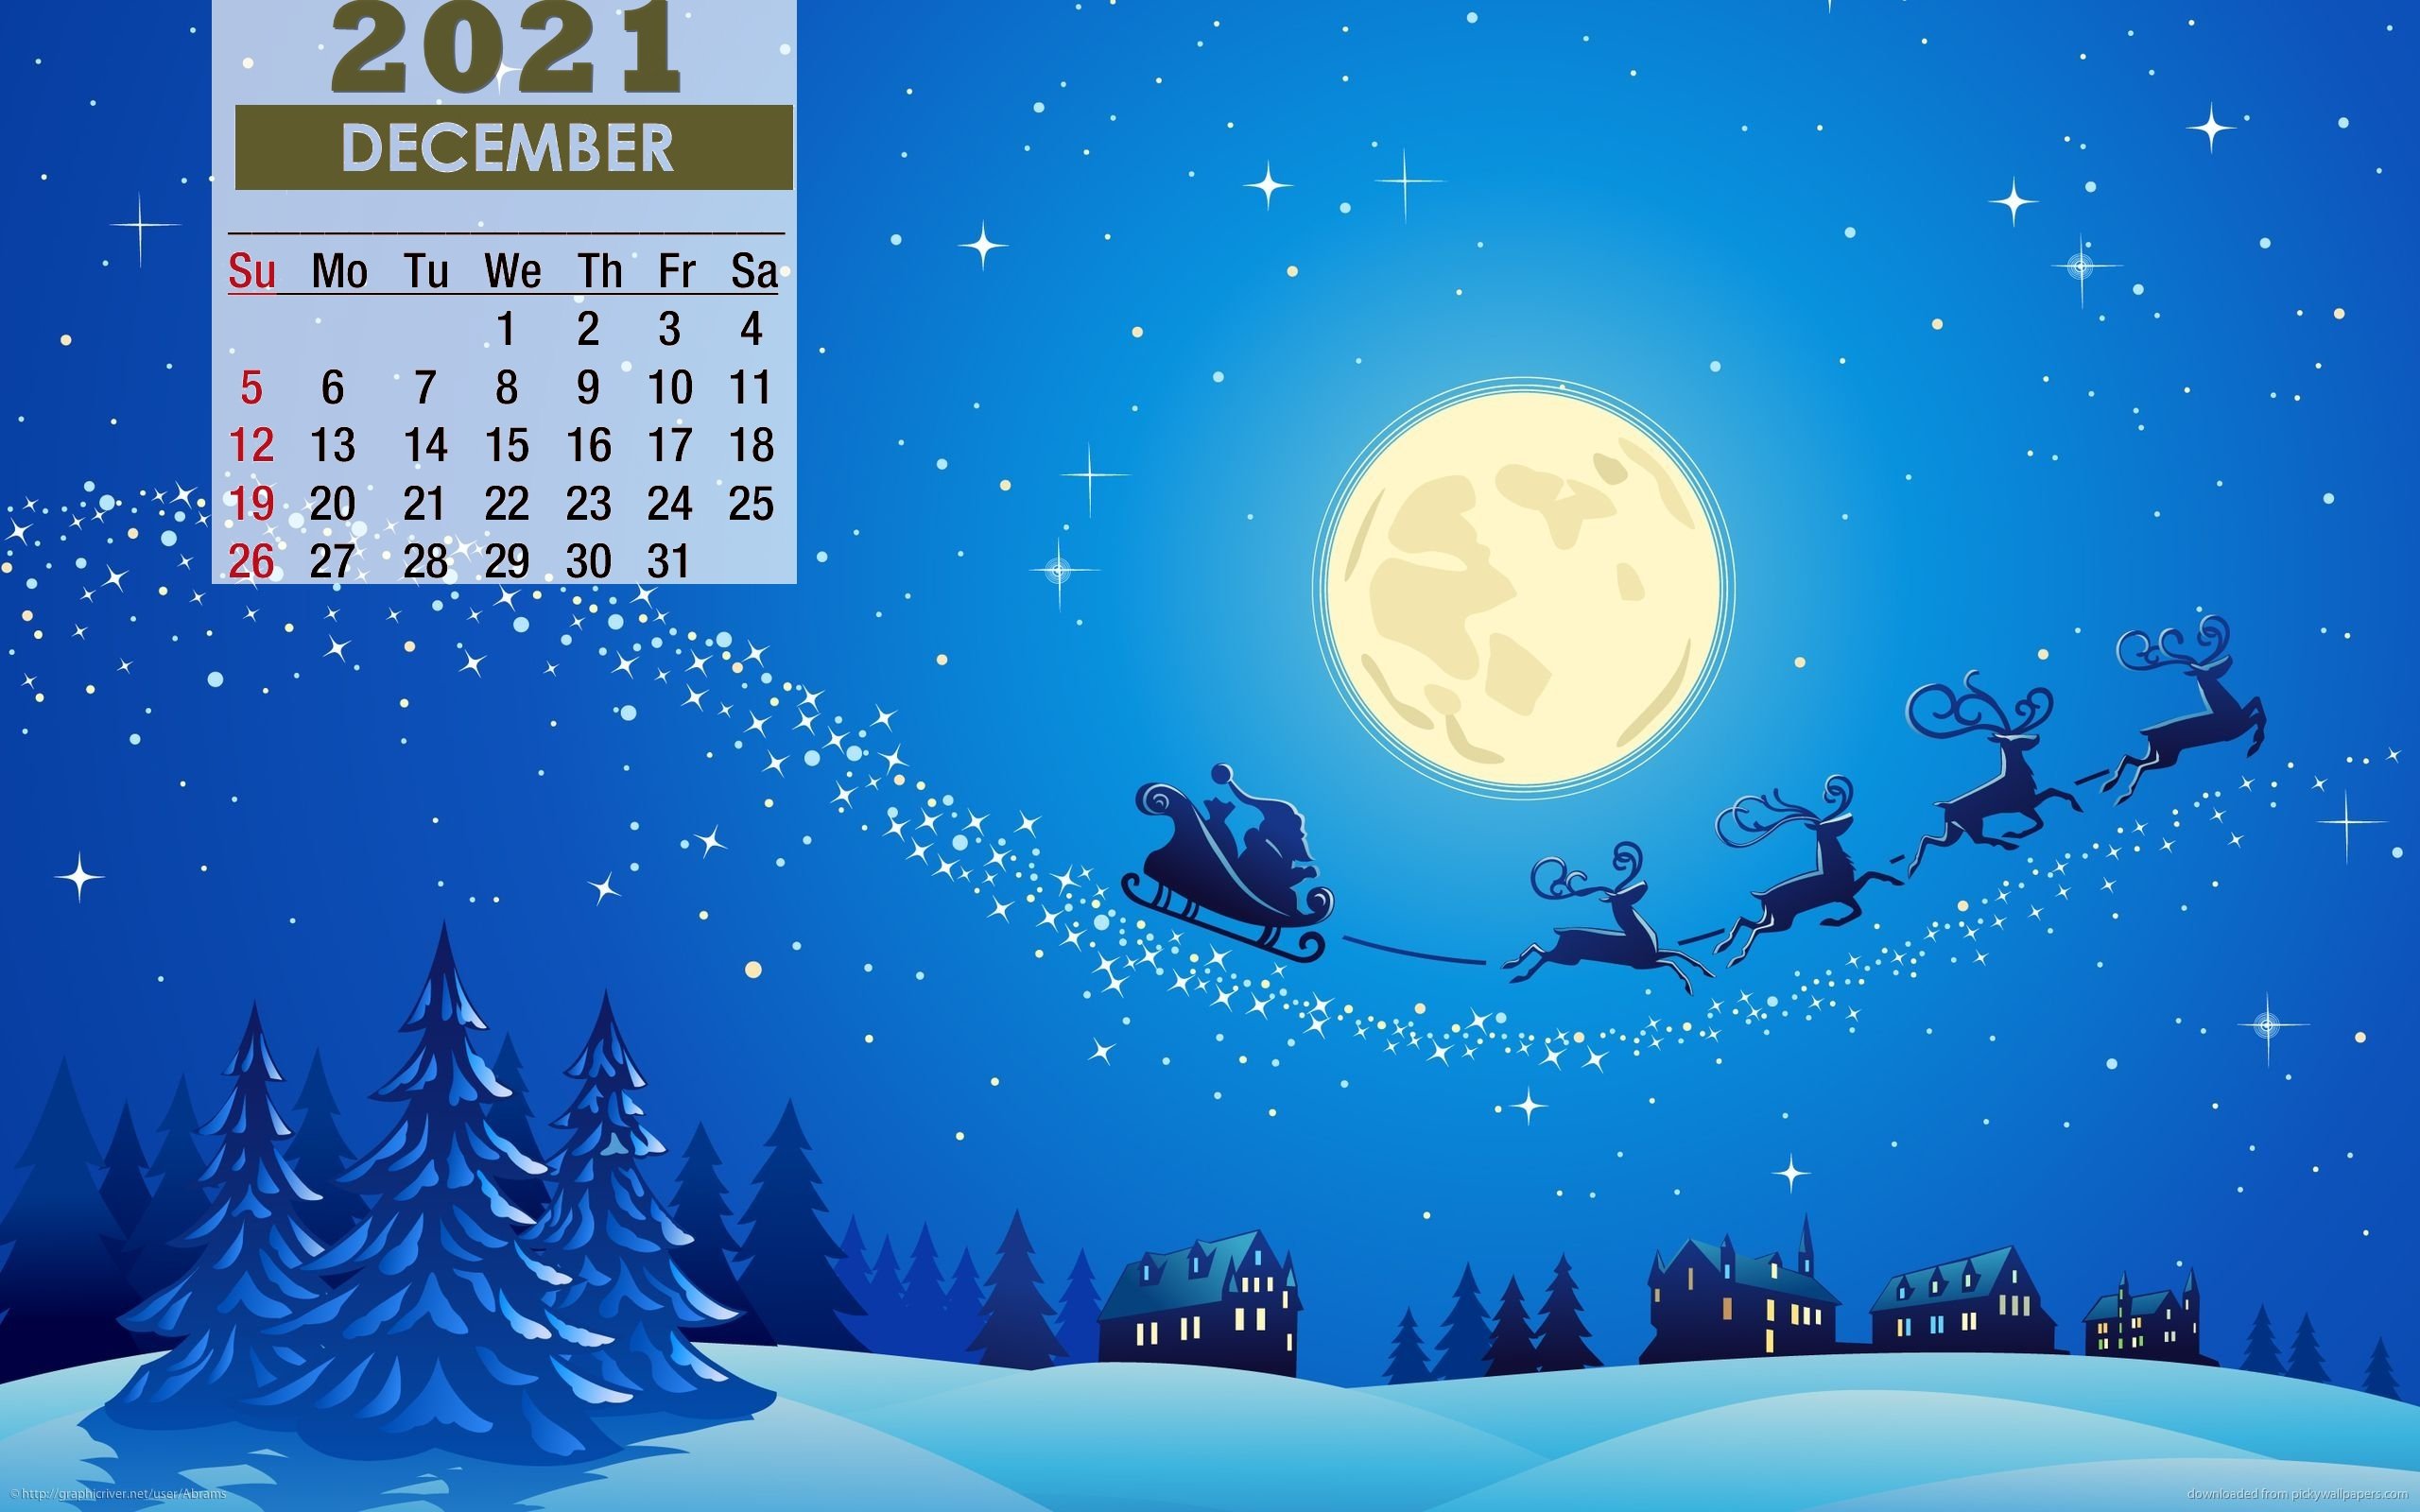 December 2021 Calendar Santa Sleigh Wallpaper 72201